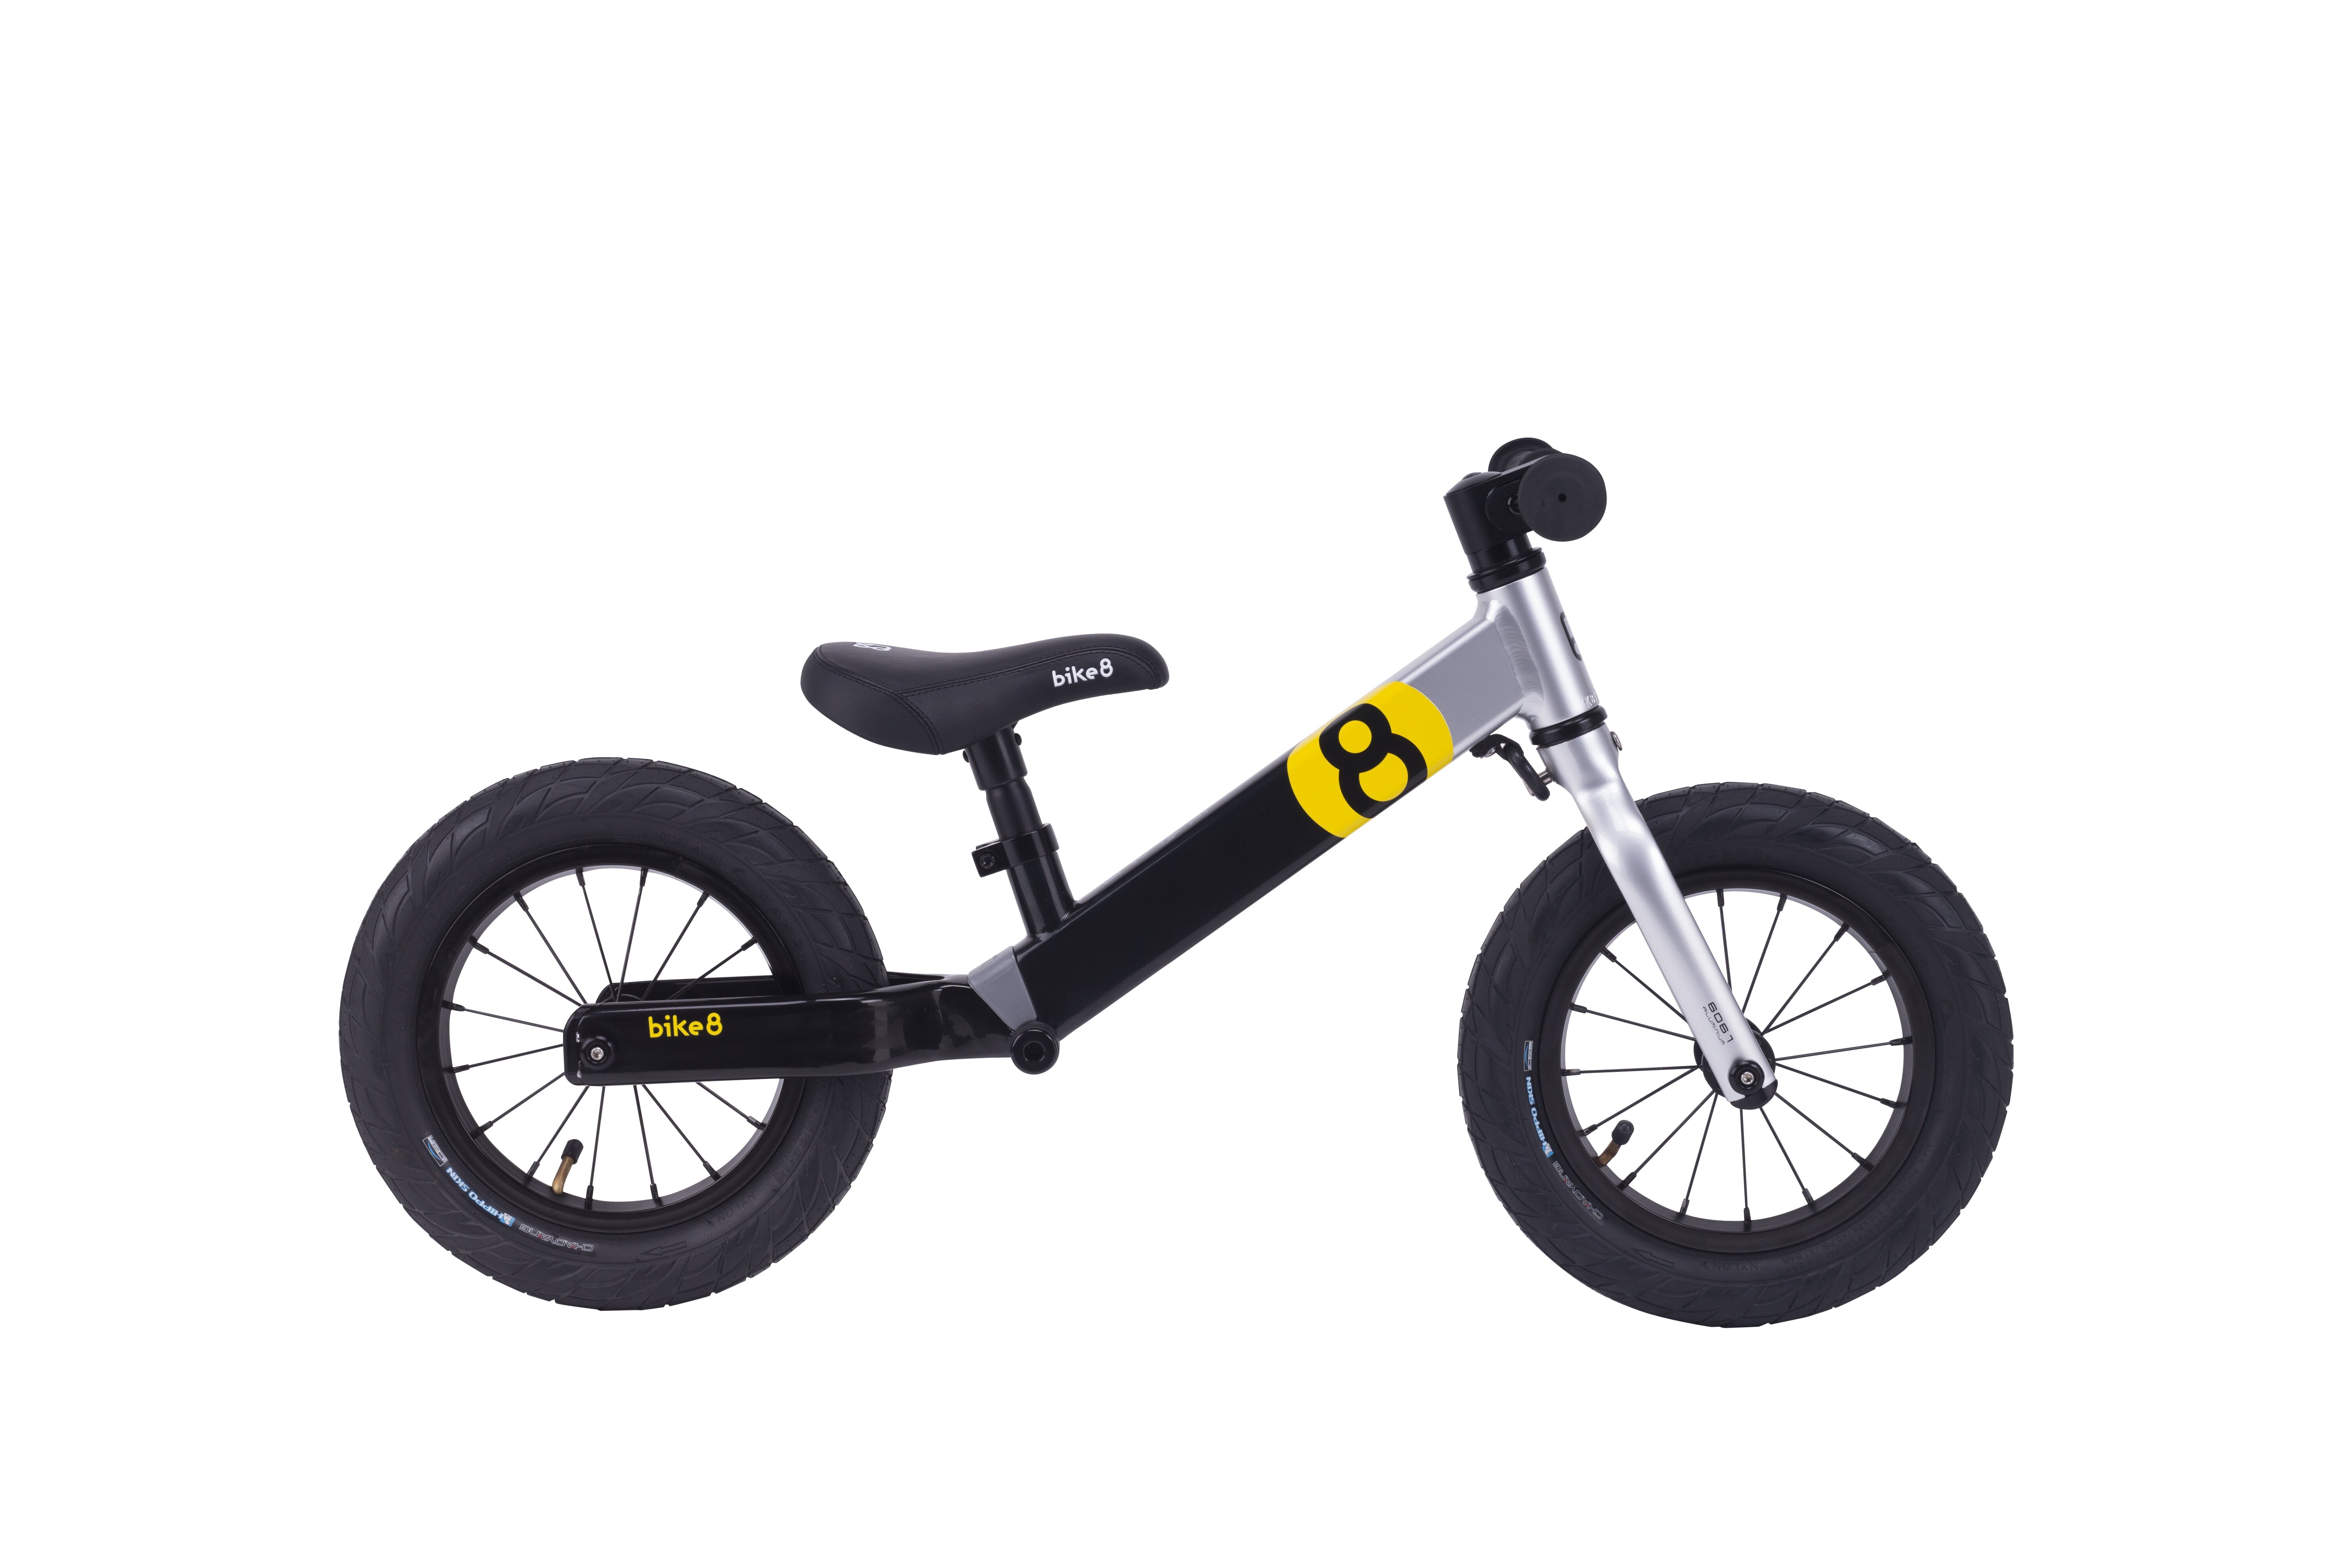 Bike8 - Suspension - Standart (Black-Silver)